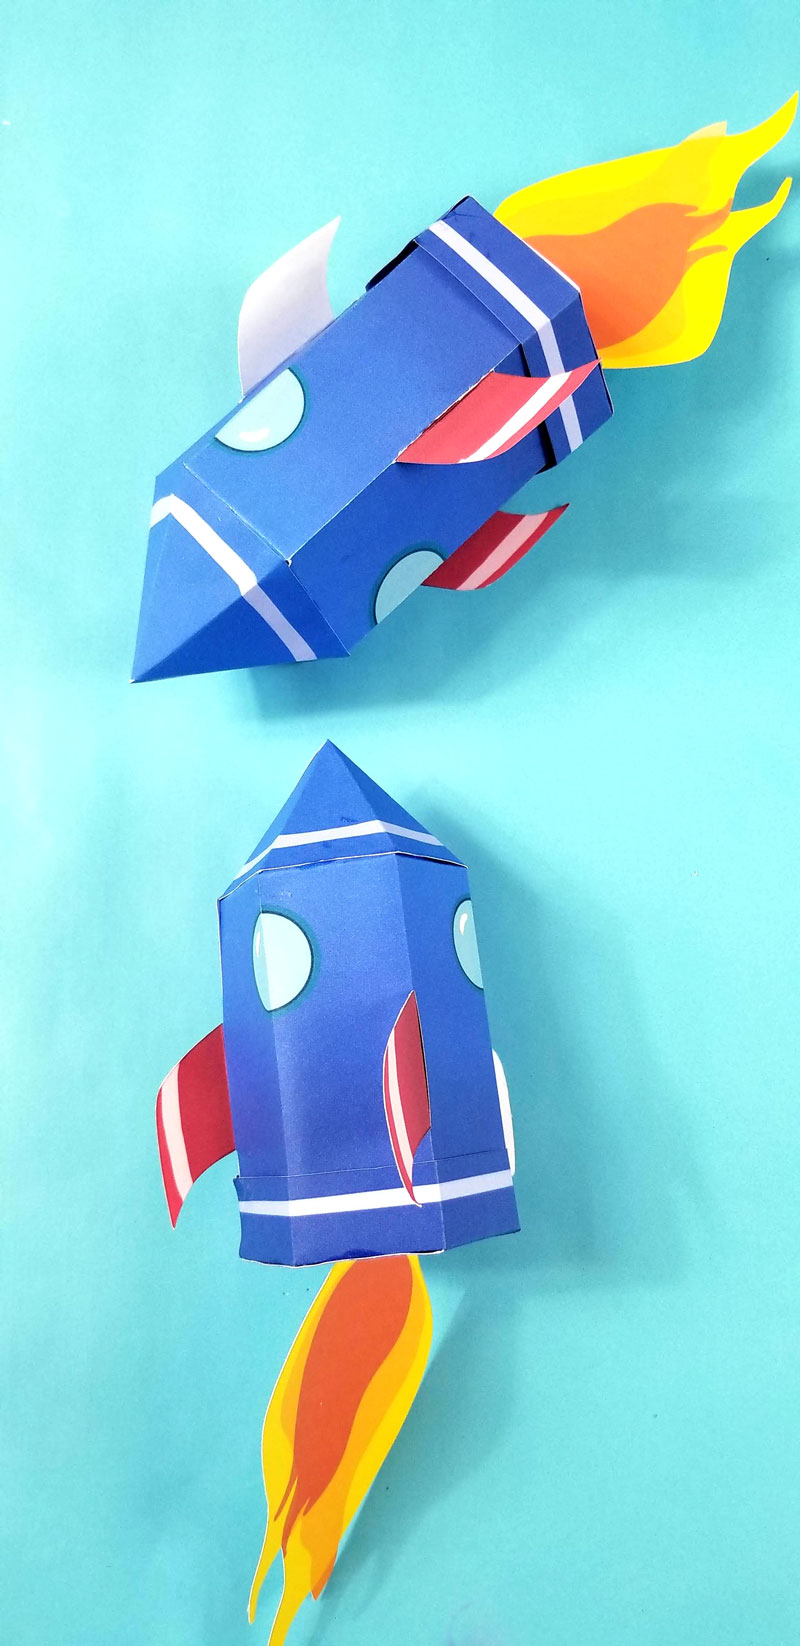 nasa paper rocket template